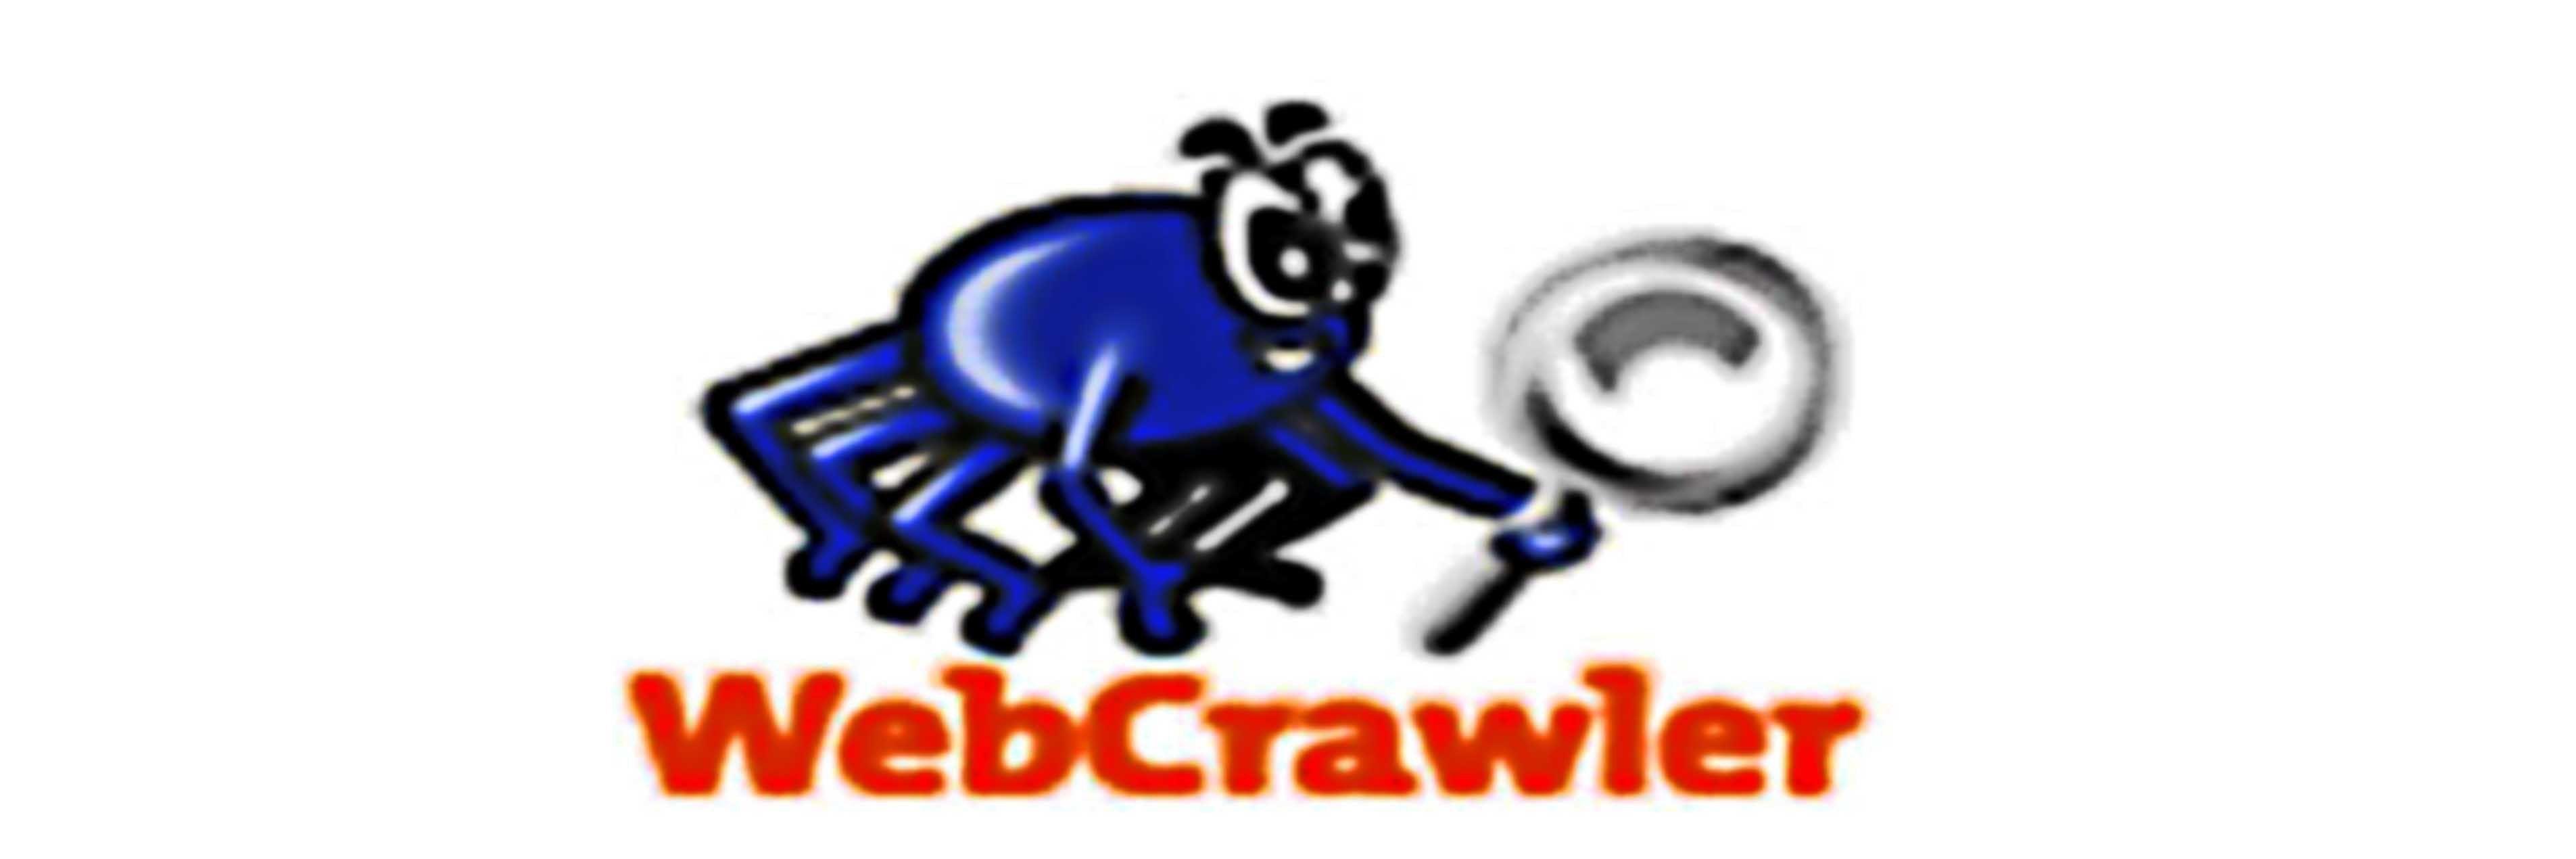 WebCrawler Logo - of the most popular search engines. Athrinel Marketing LLC, USA